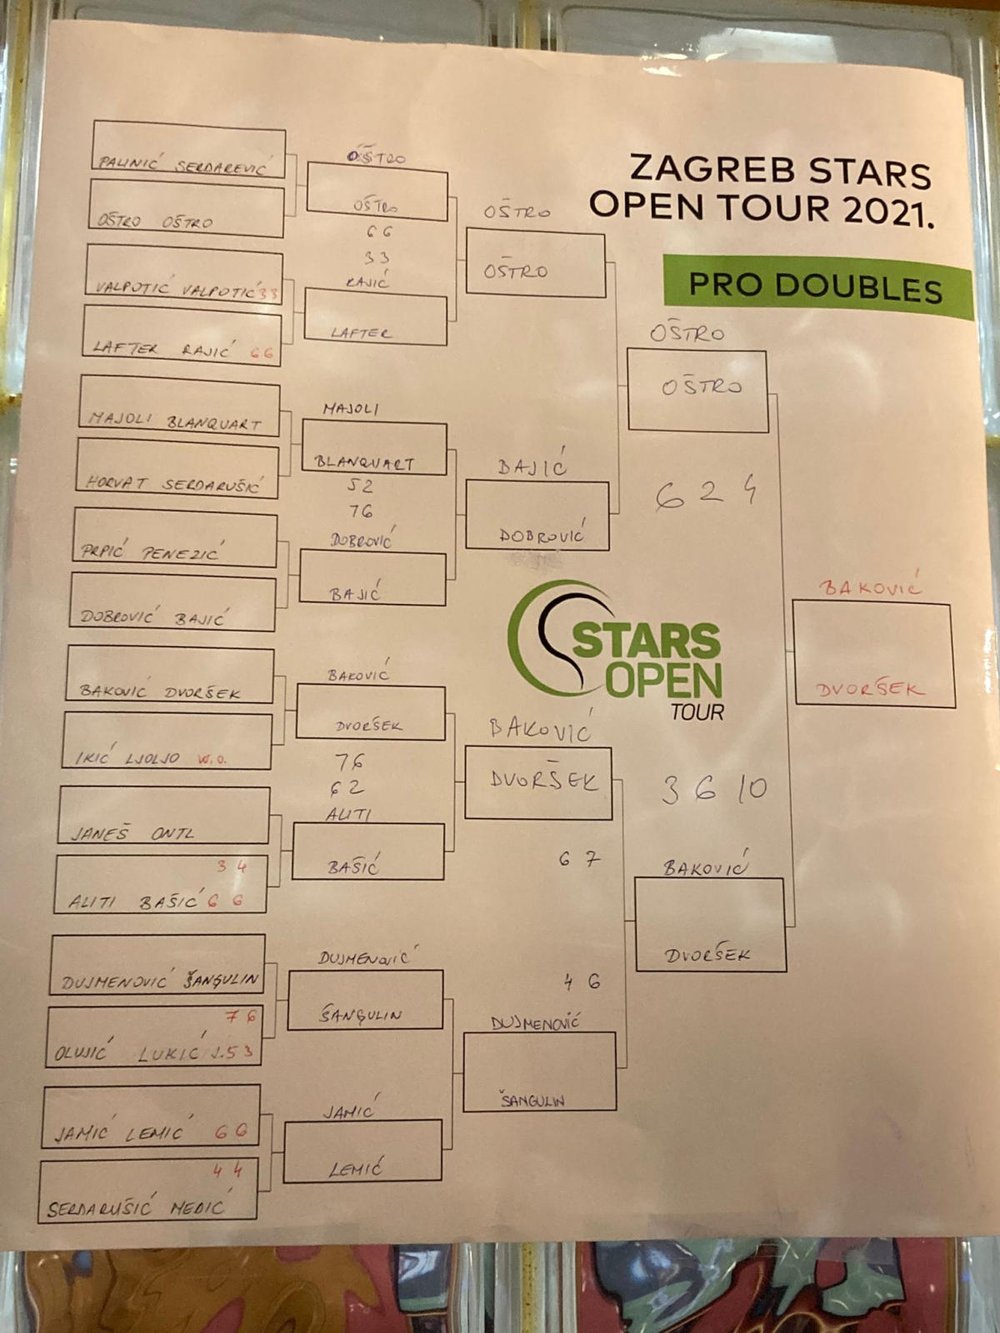 Zagreb Stars Open Tour 2021 Pro Doubles winners